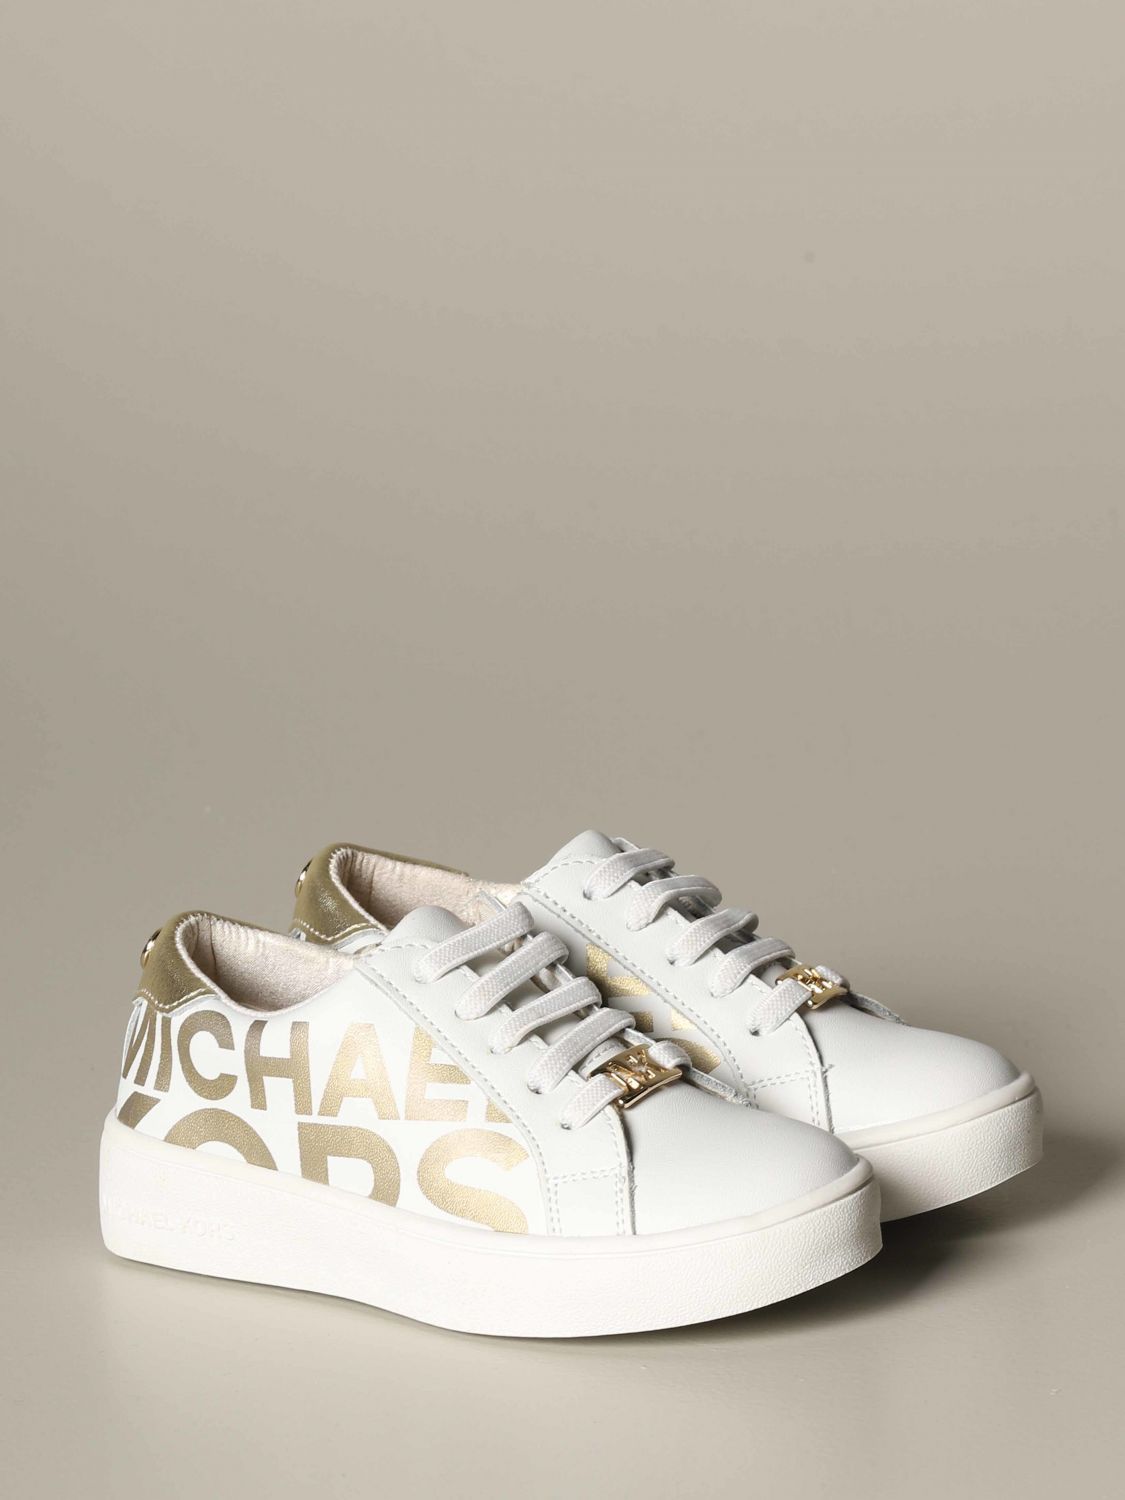 michael kors baby boys shoes